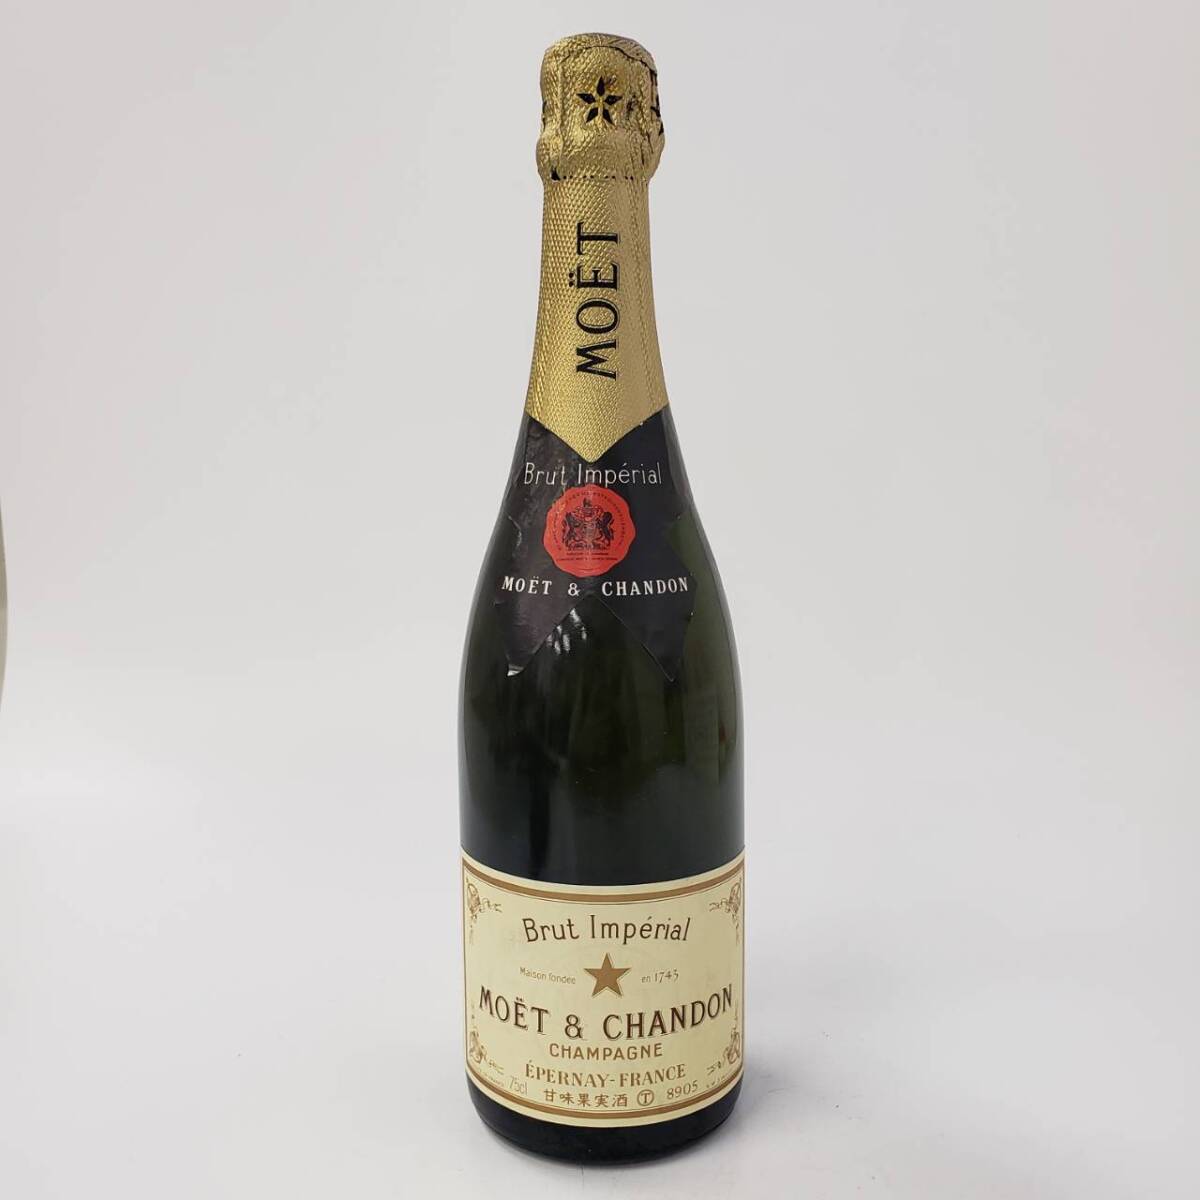 M41170(061)-587/MS3000 sake MOET&CHANDON CHAMPAGNE Brut Imperialmoe*e* car n Don Anne . real champagne 12% 750ml